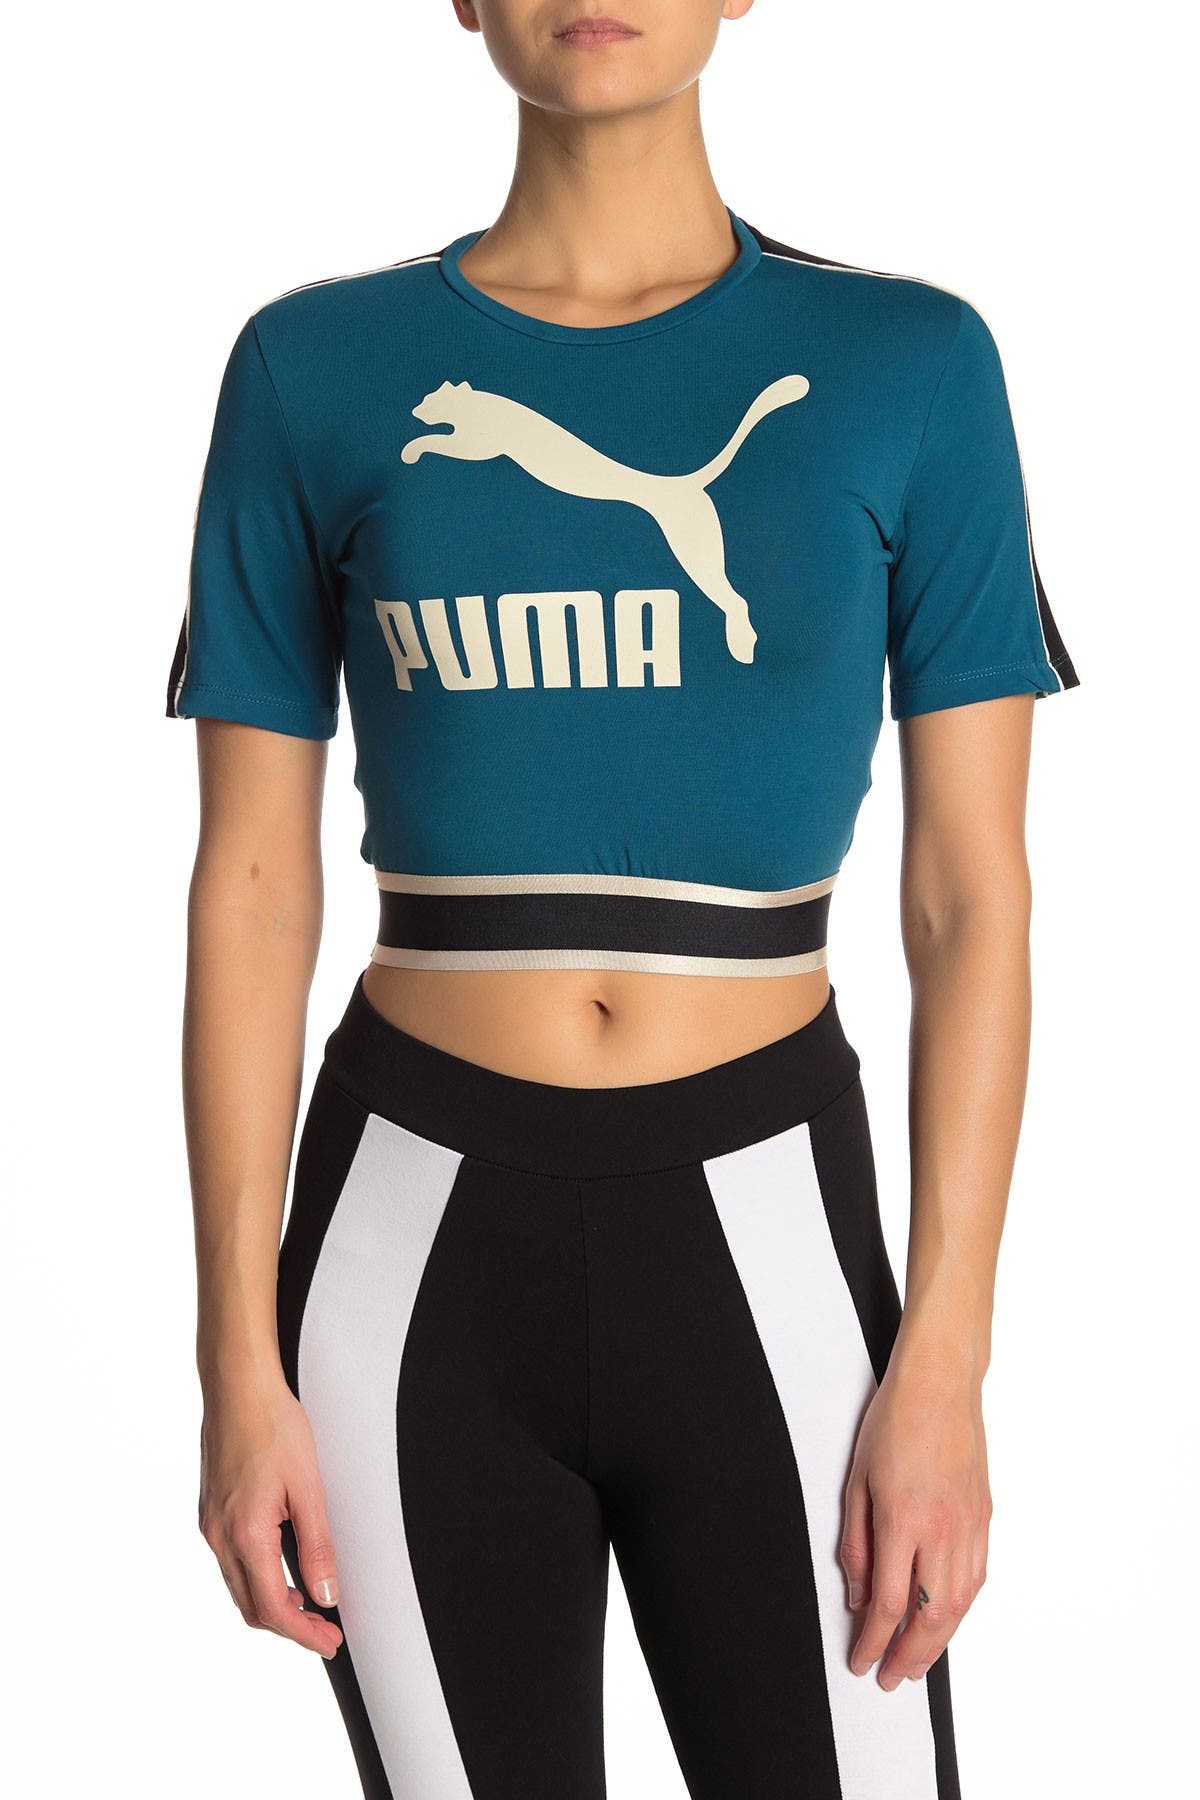 puma cropped shirt